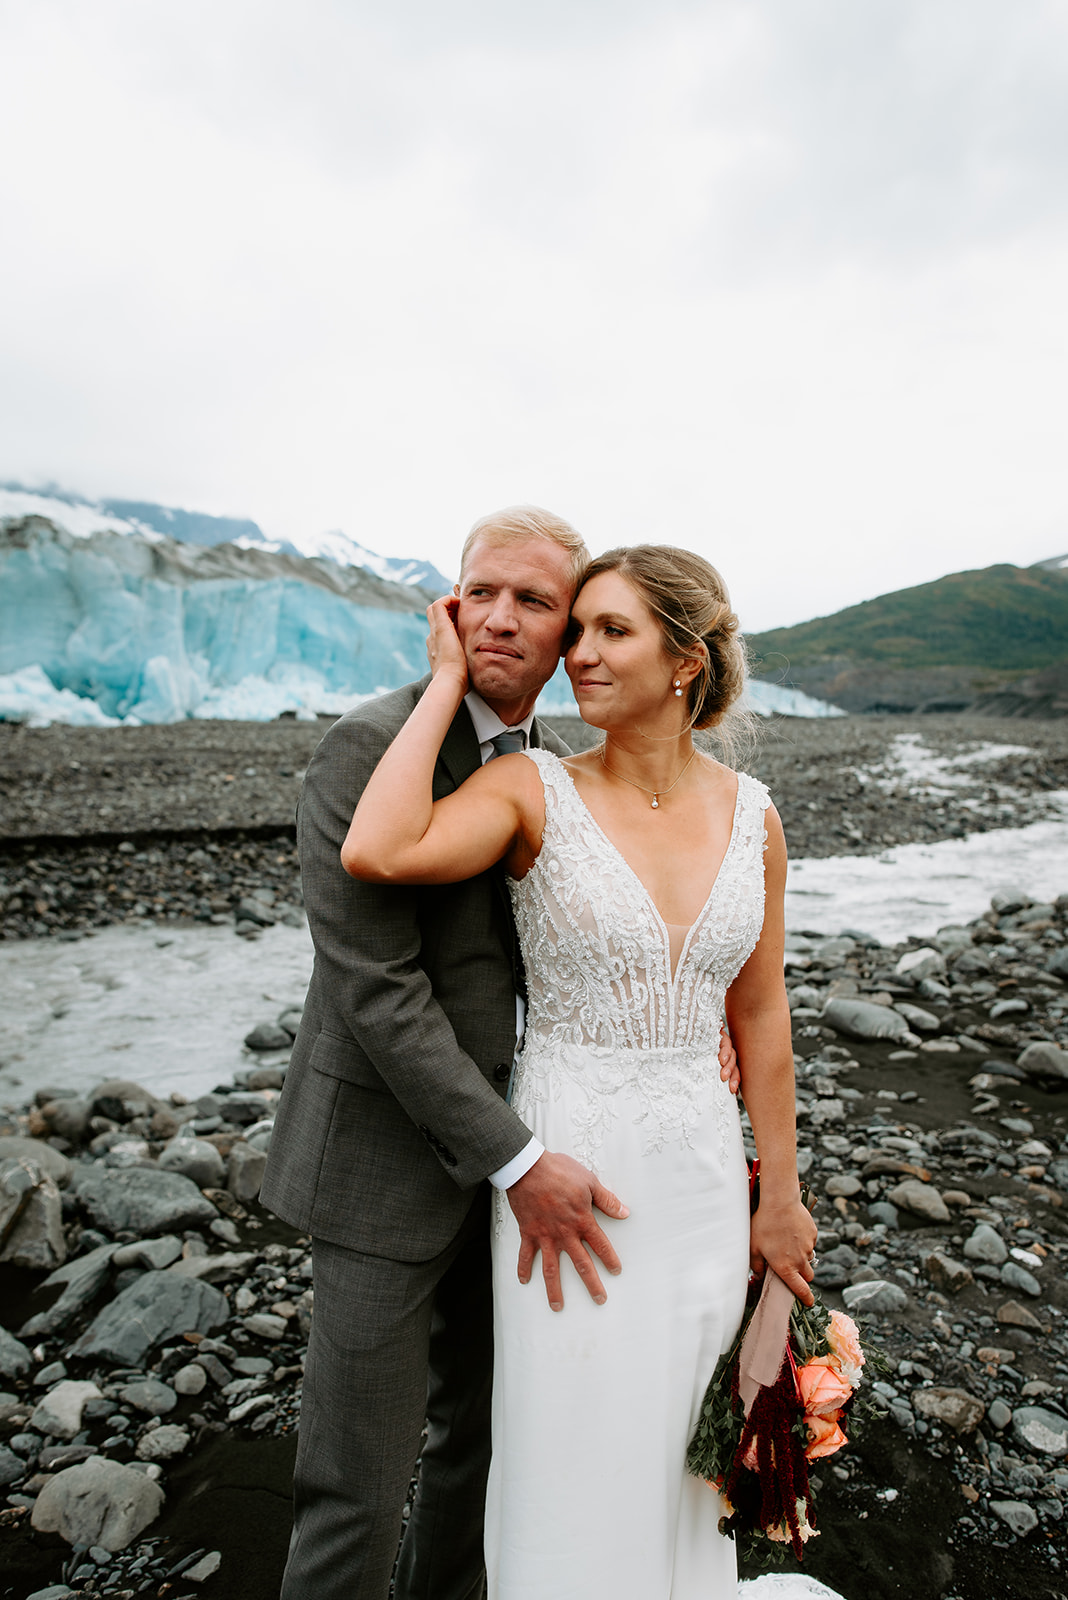 advenurous-editorial-elopement-lake-george-alaska-photography-zoya-dawn